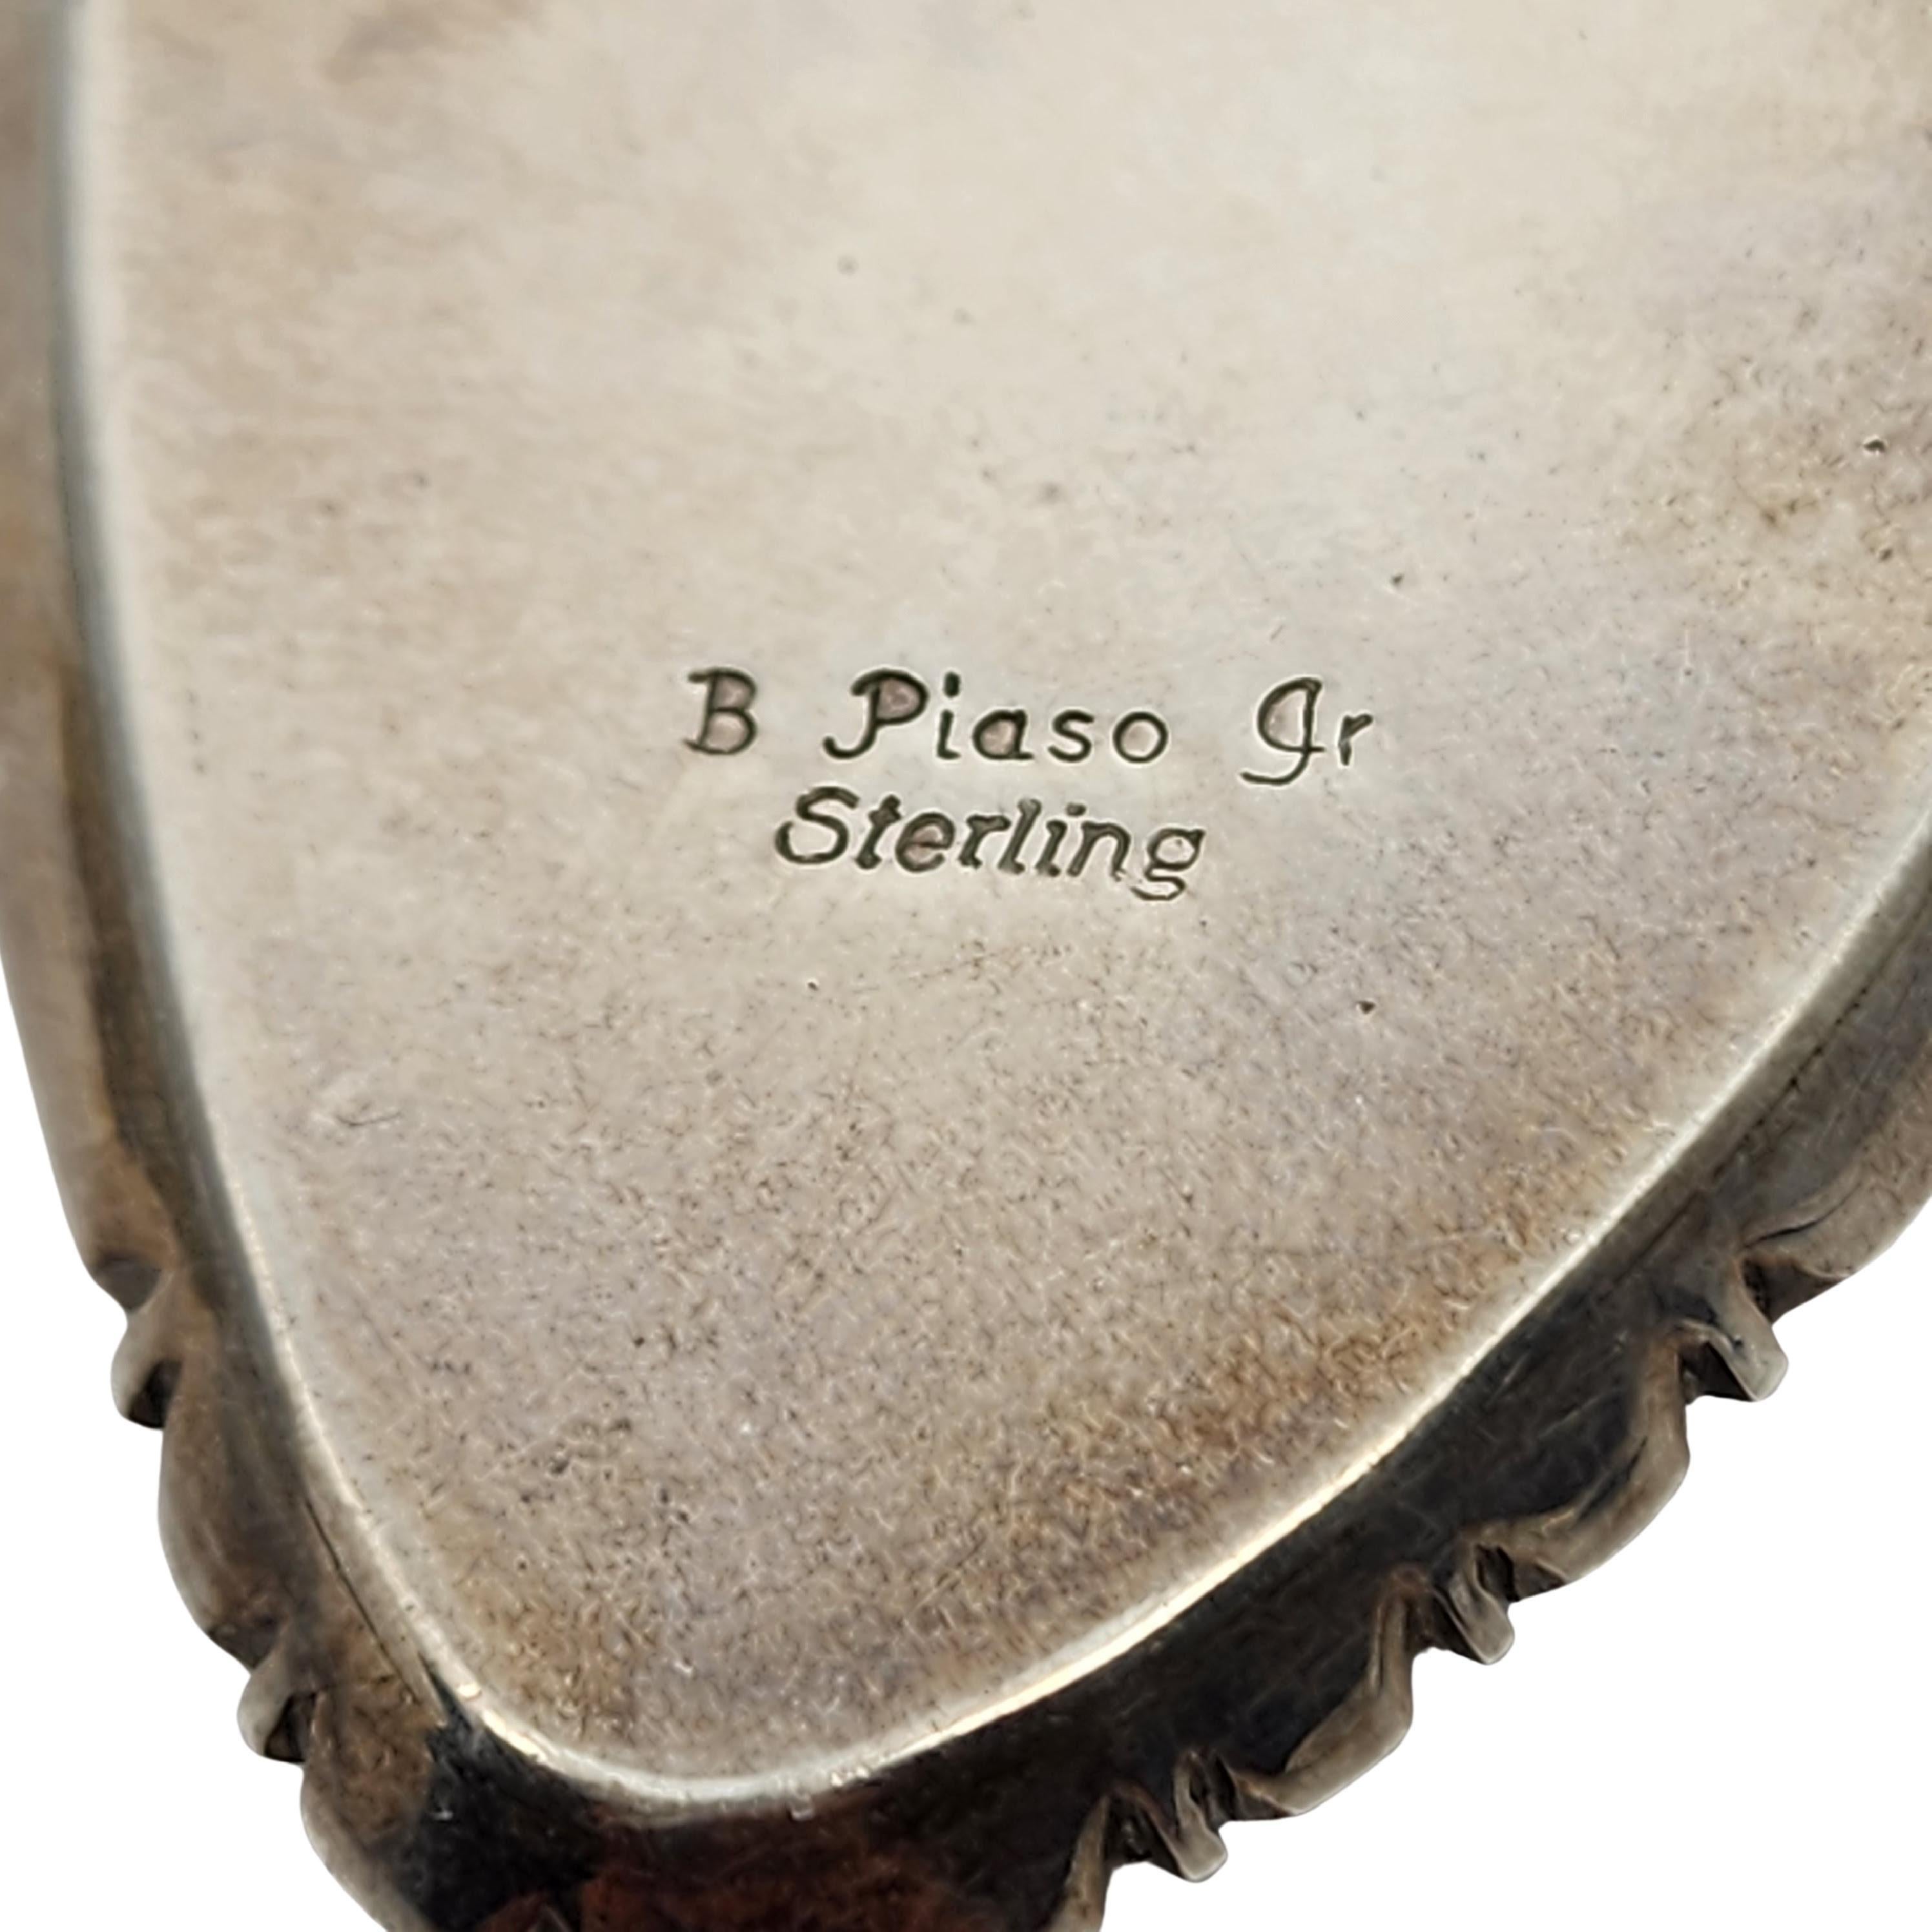 Native American B Piaso Jr Sterling Silver Charoite Pendant/Pin #16151 1